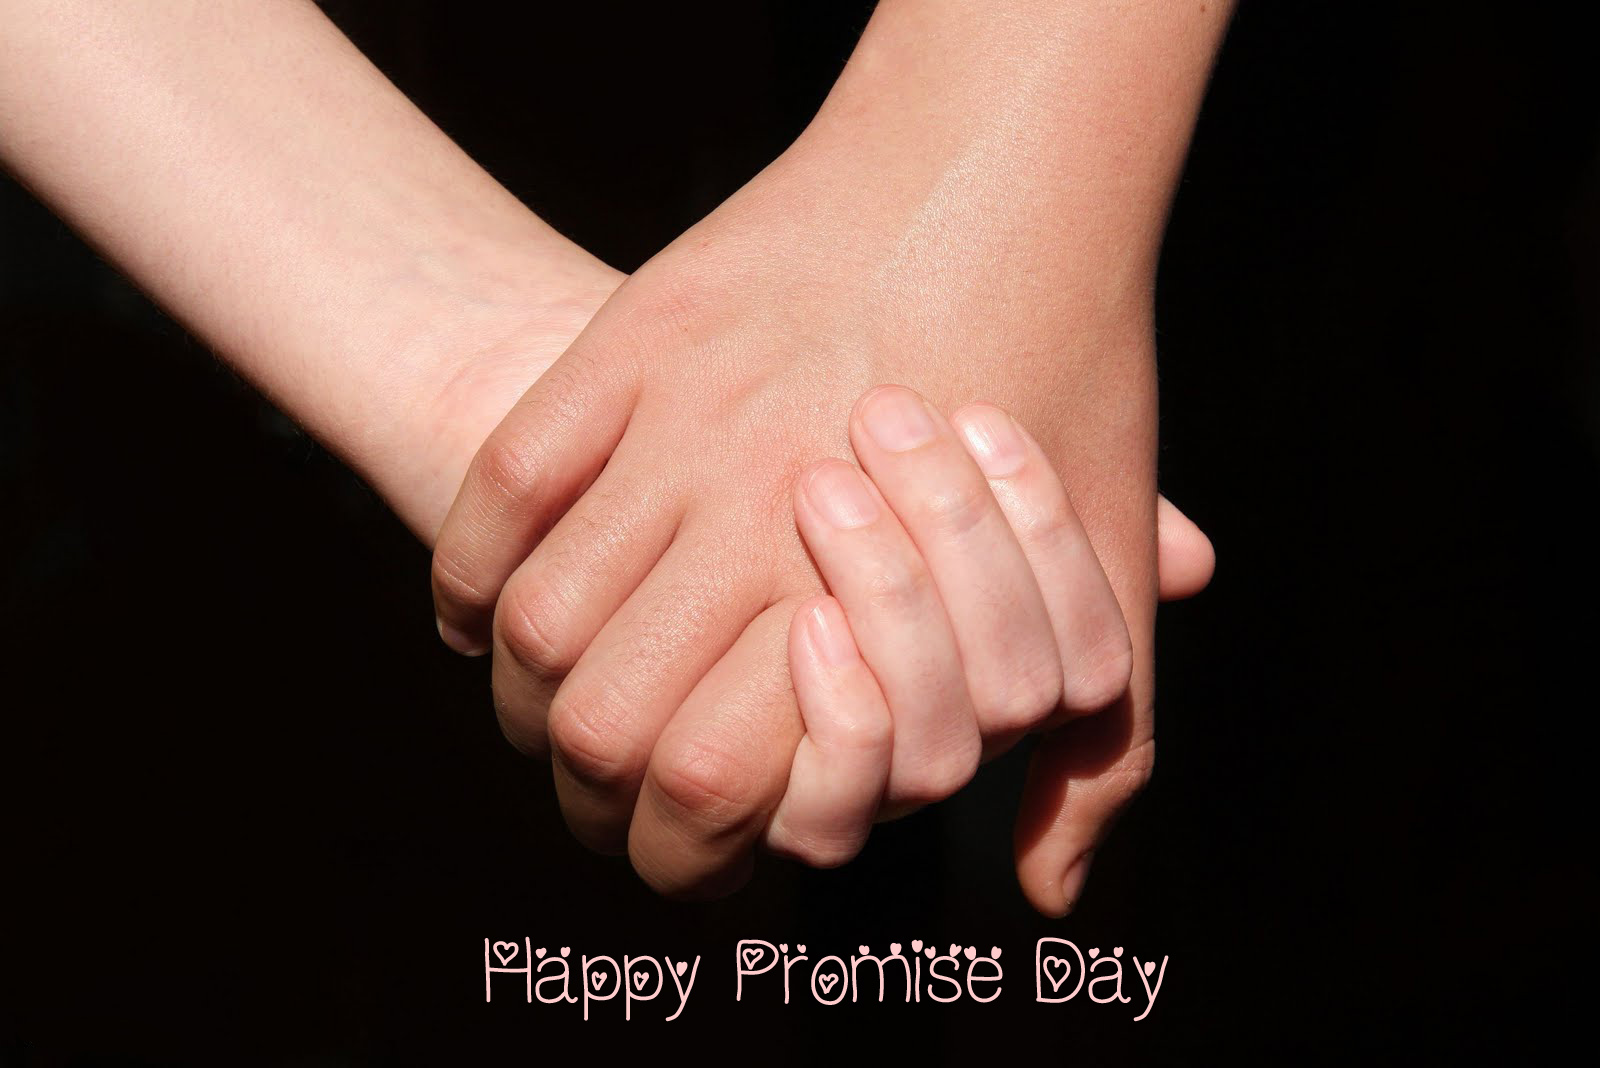 Happy Promise Day Image Pics Photos Wallpaper